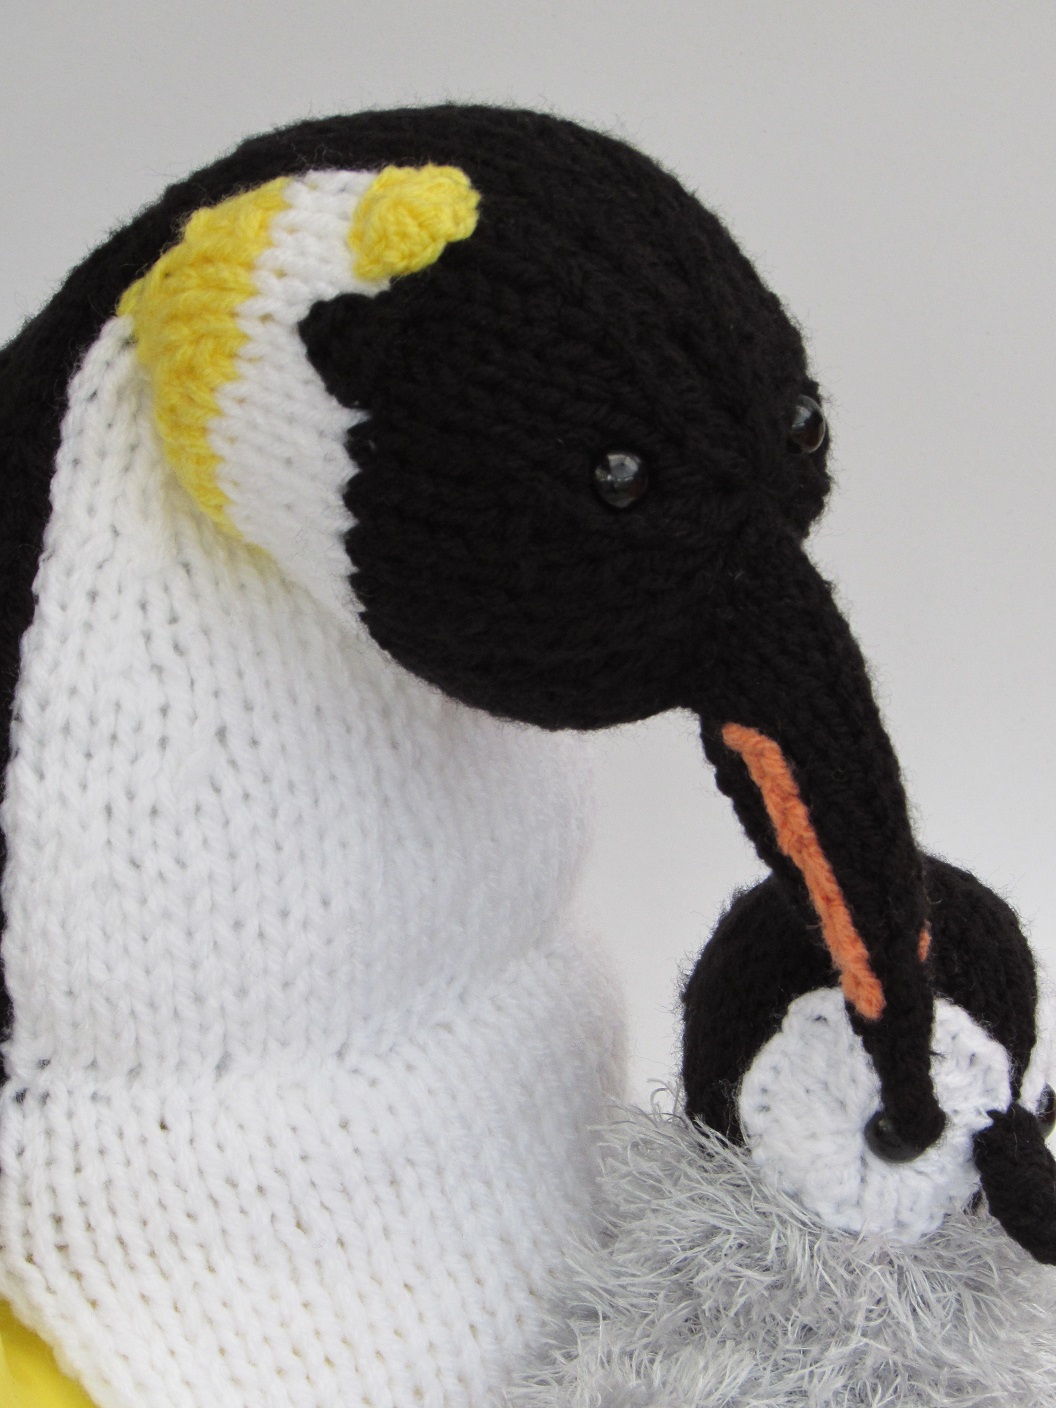 Emperor Penguin Duo knitting pattern